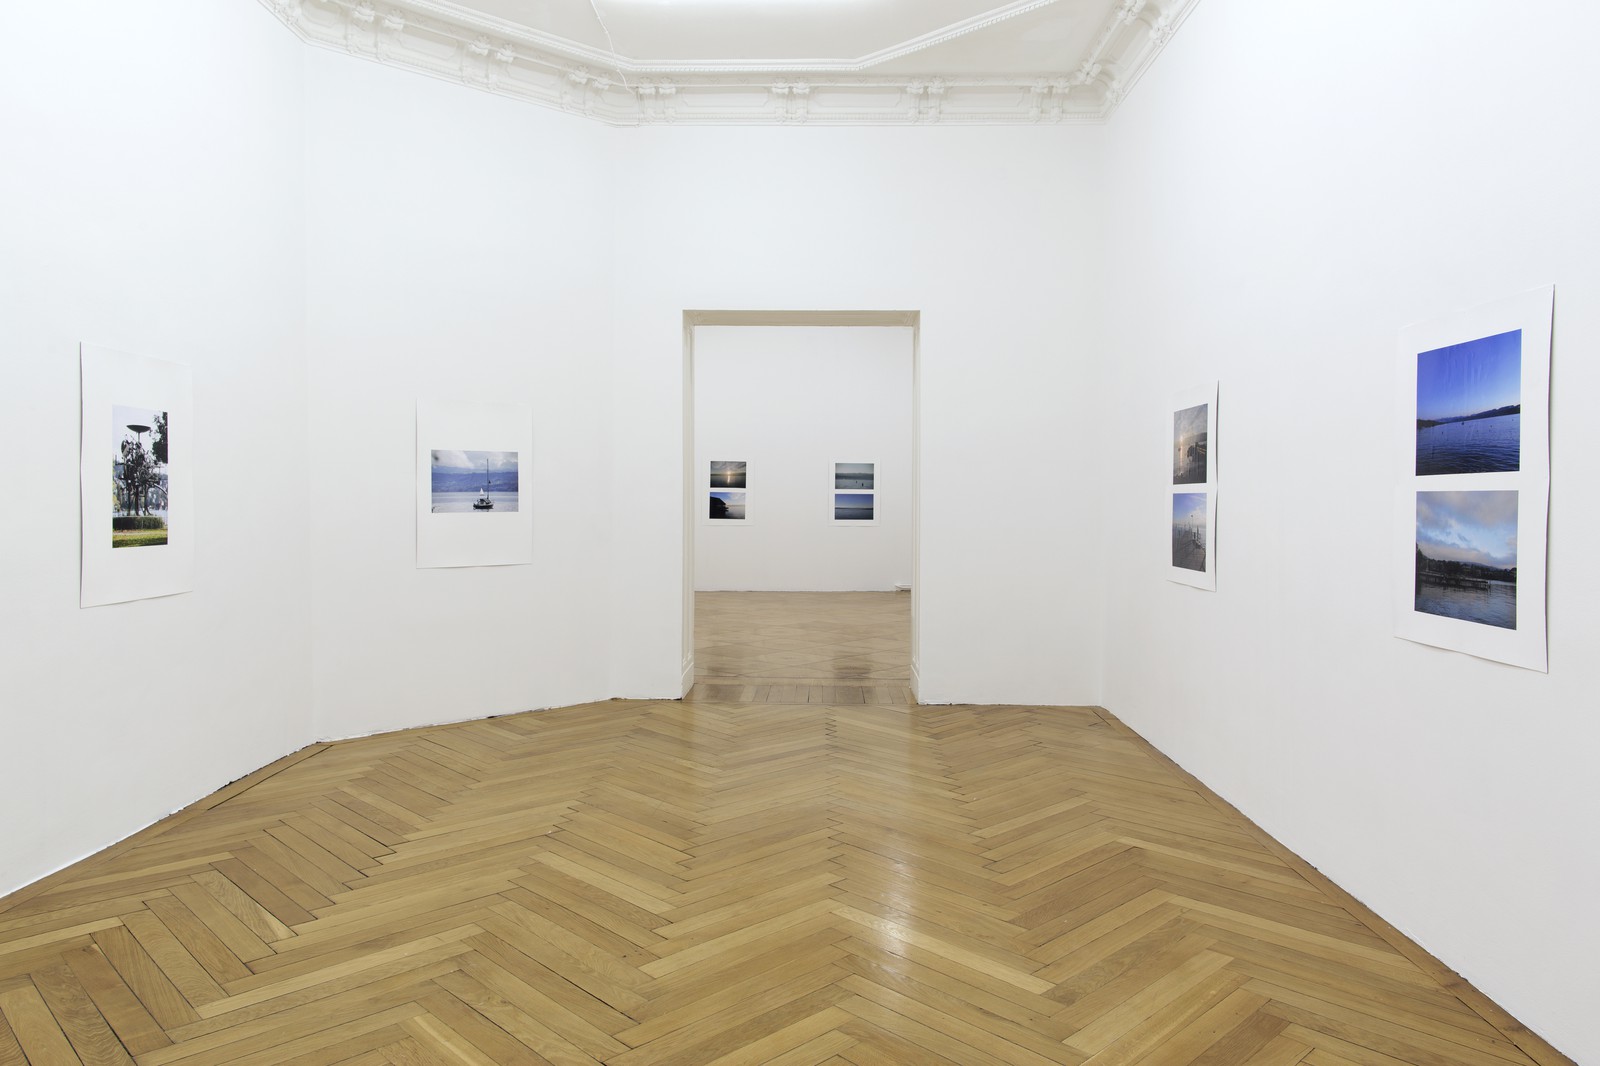 Installation view, Schätze der Erinnerung, Société, Berlin, 2015